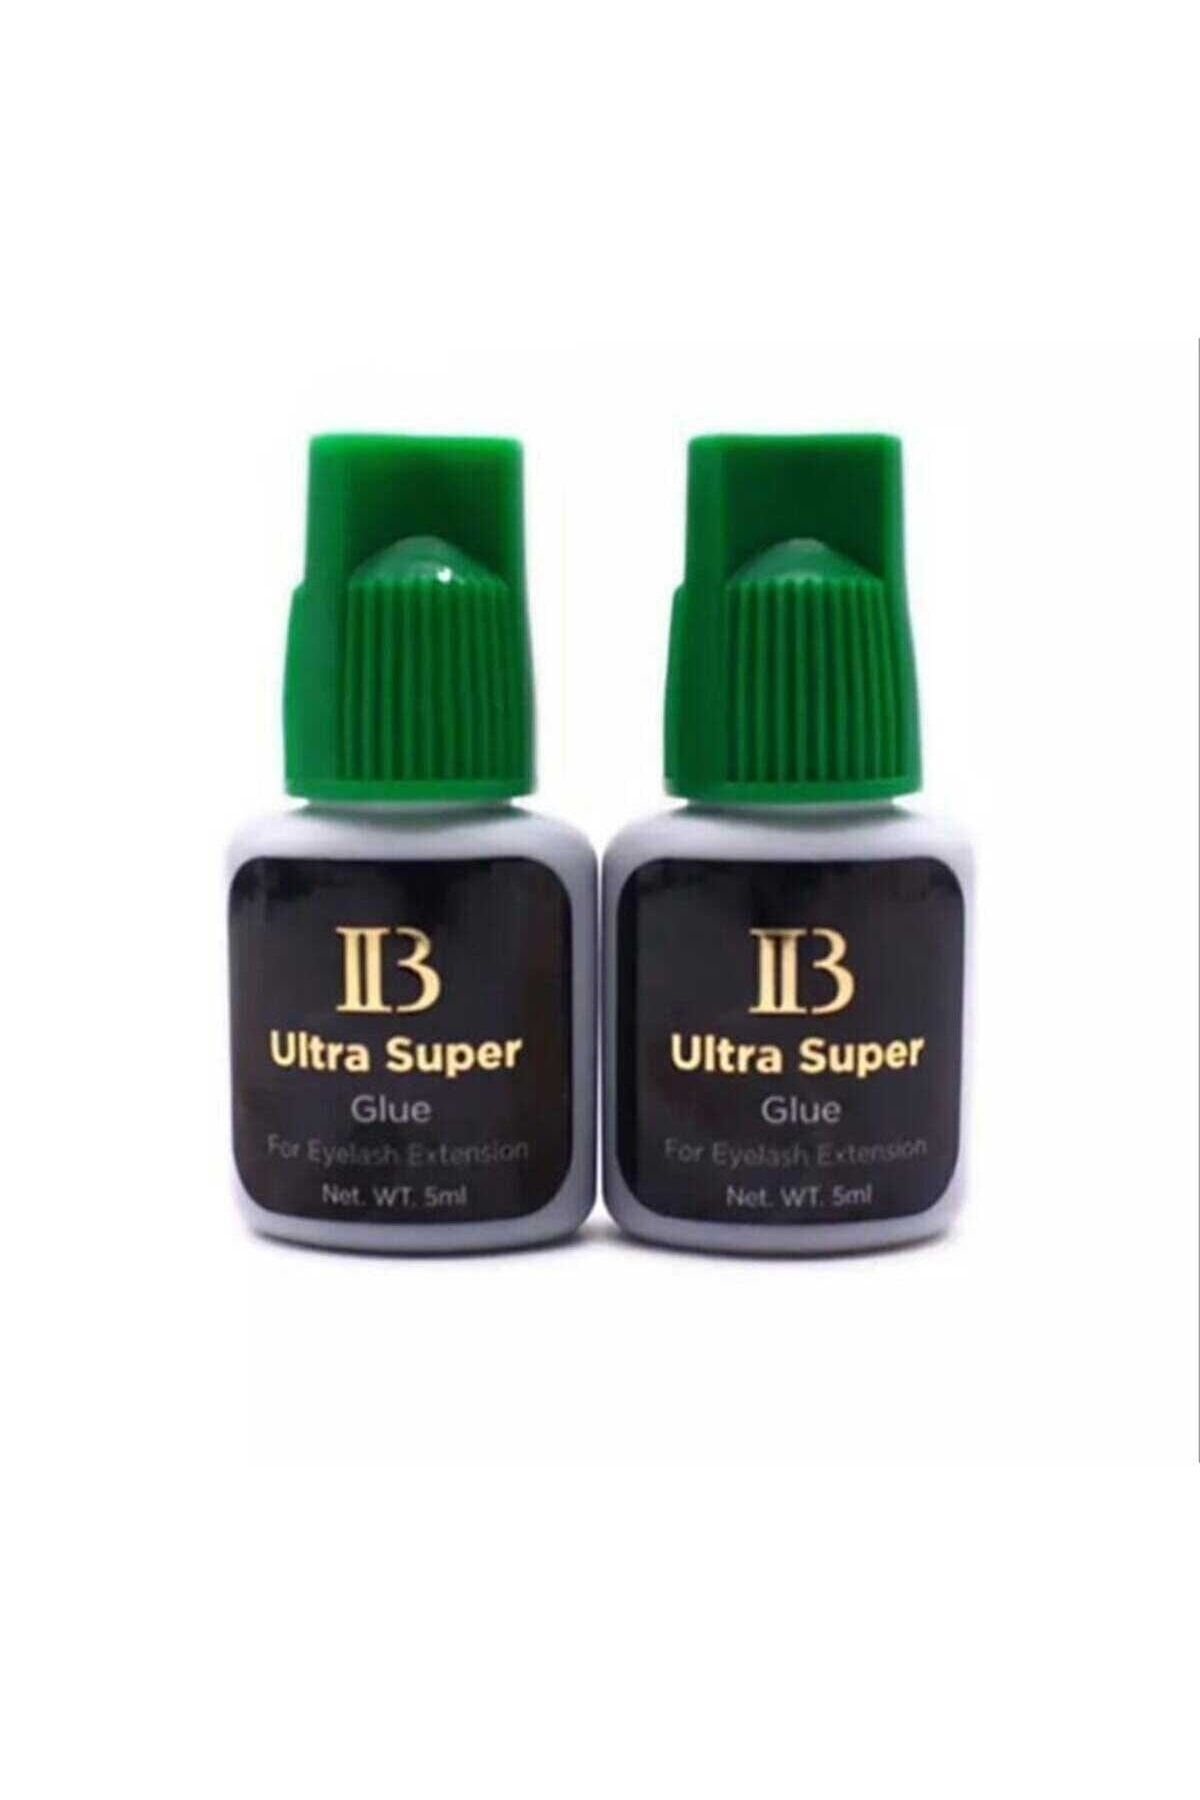 IB I-Beauty Ib Ultra Super Glue Ipek Kirpik Yapıştırıcısı Yeşil Kapak Ib